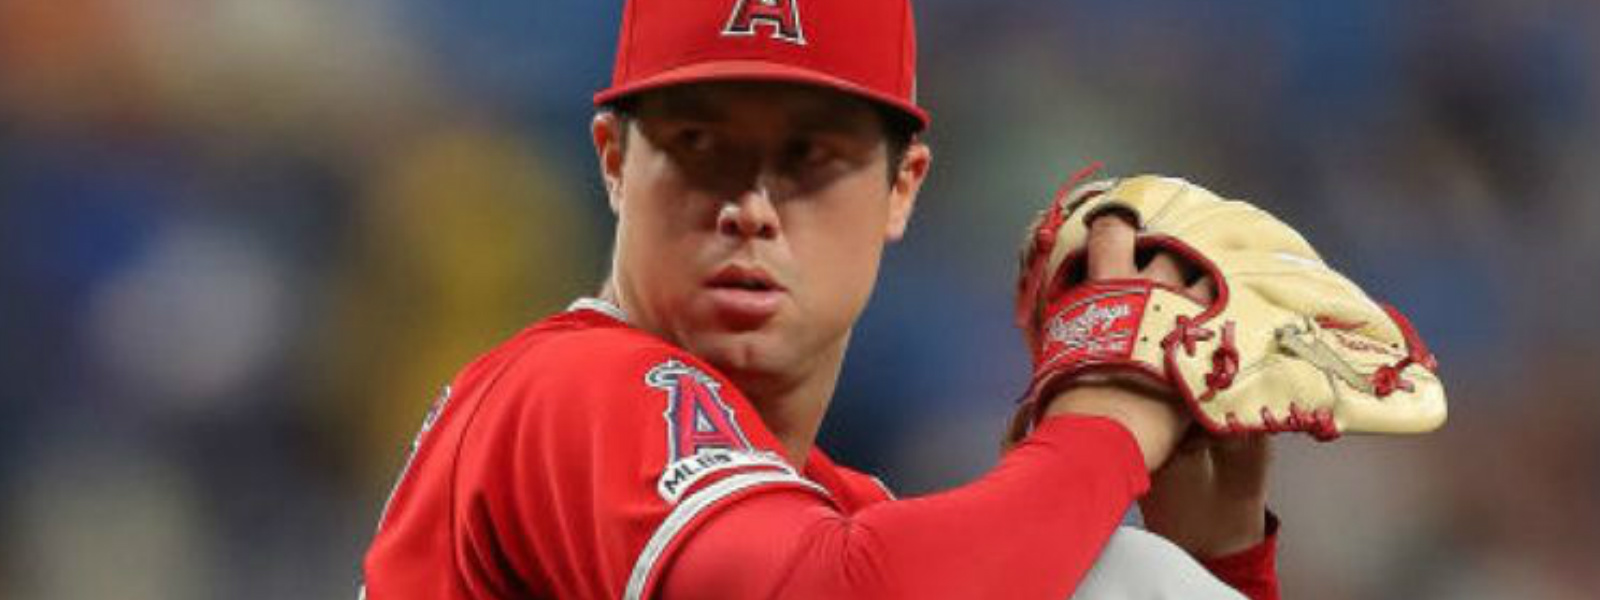 LA Angels pitcher Tyler Skaggs dies at age 27